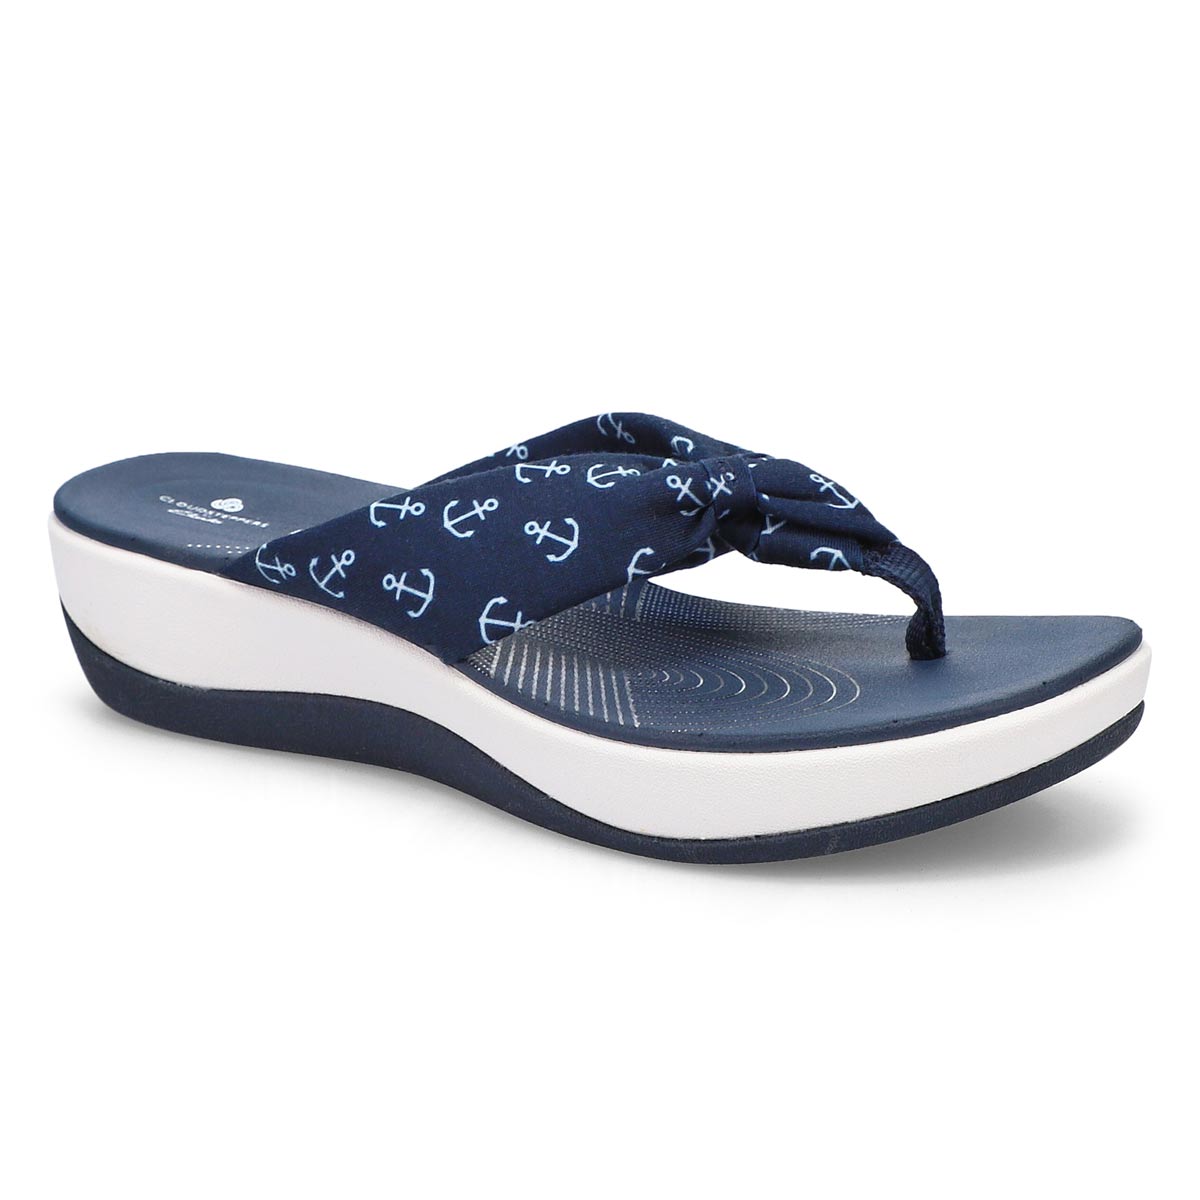 clarks sandals navy blue